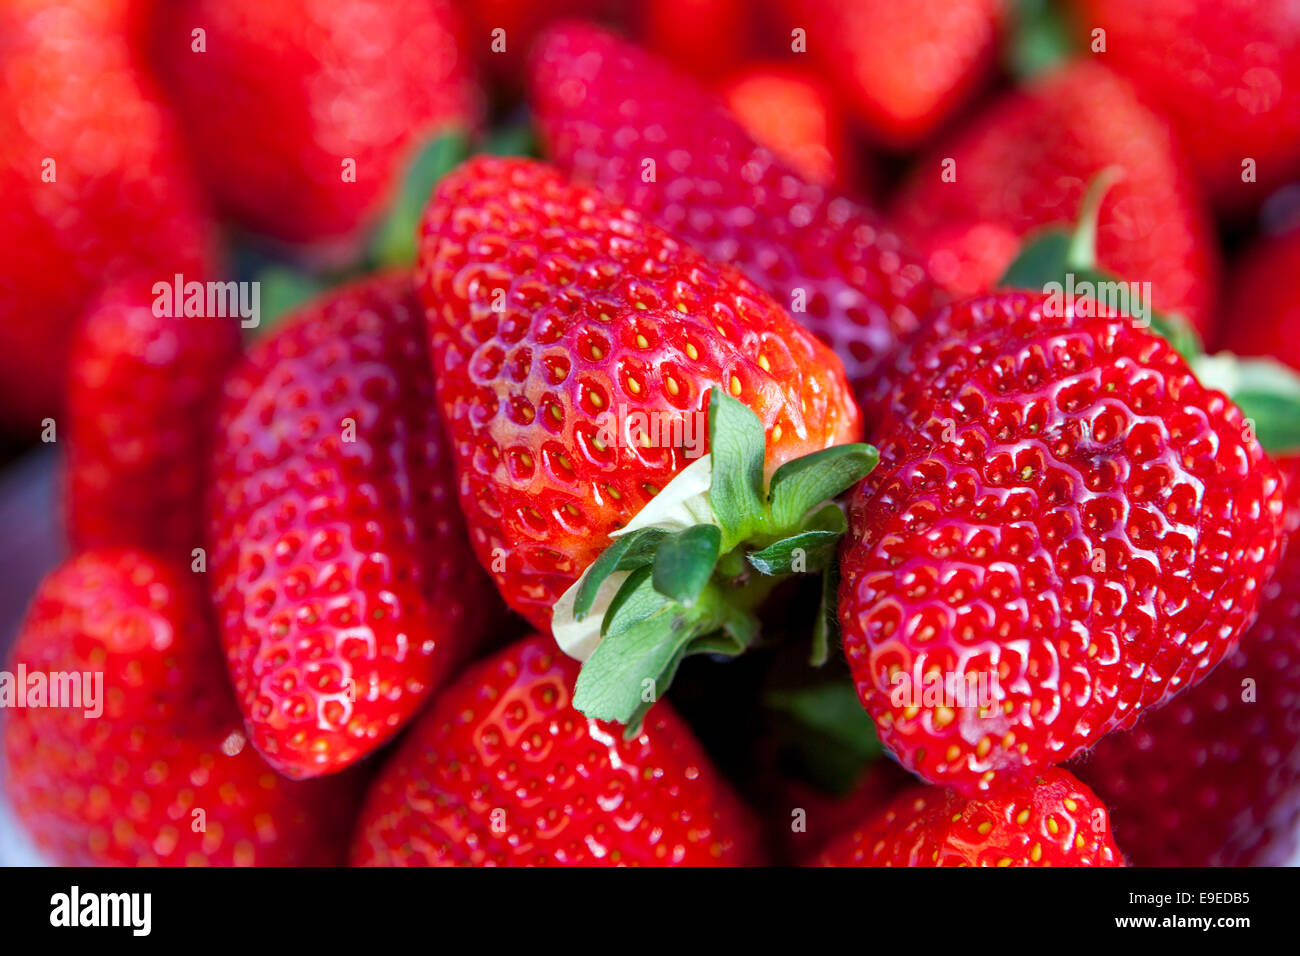 Strawberry close up Stock Photo